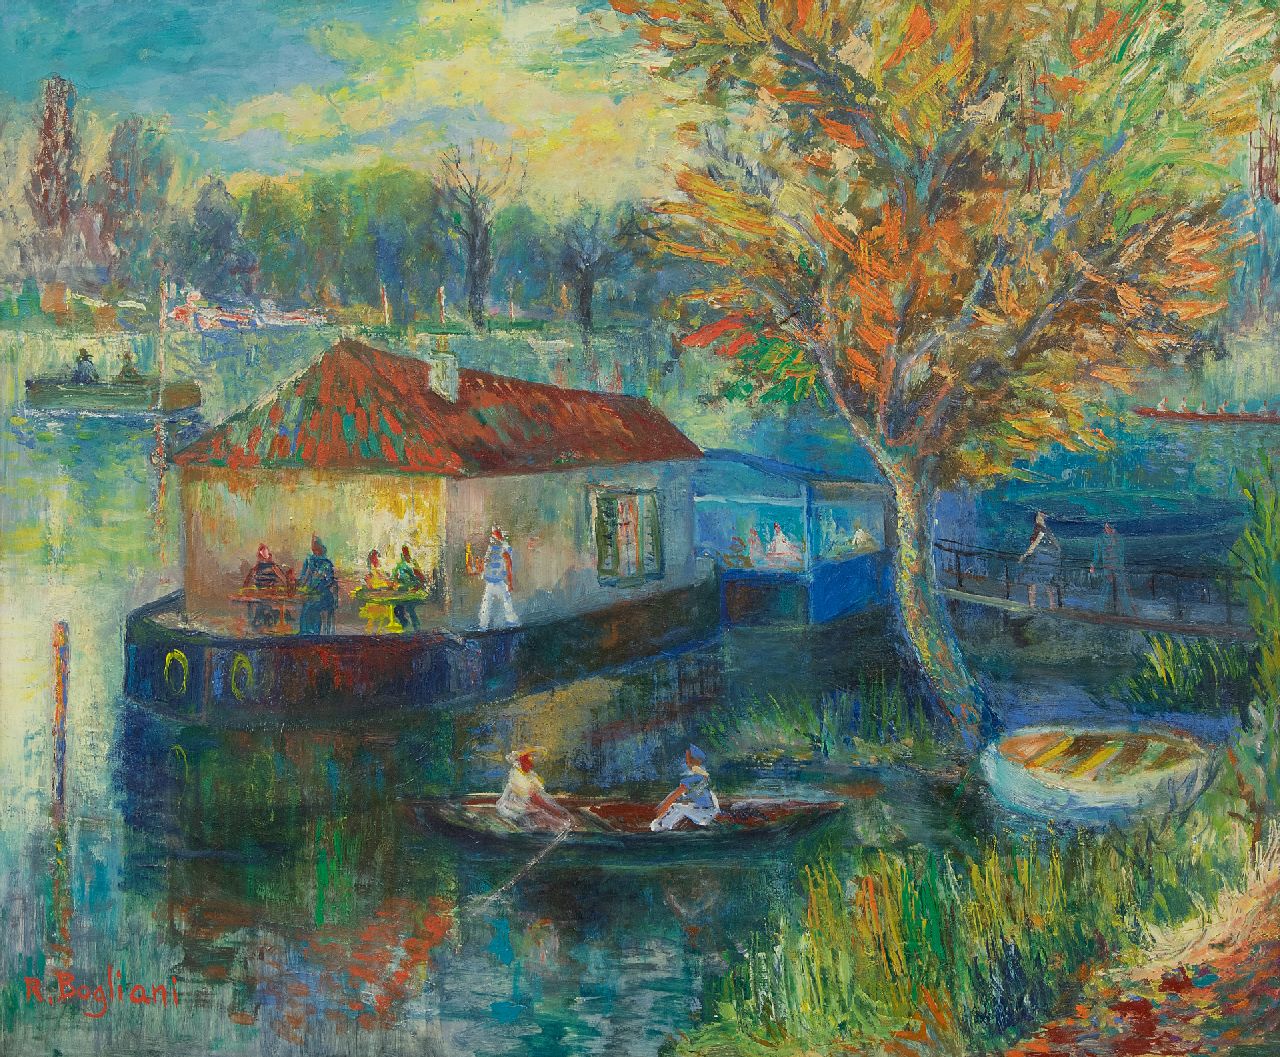 Robert Bogliani | summer café on the river, oil on board, 50.0 x 61.0 cm, signed l.l.